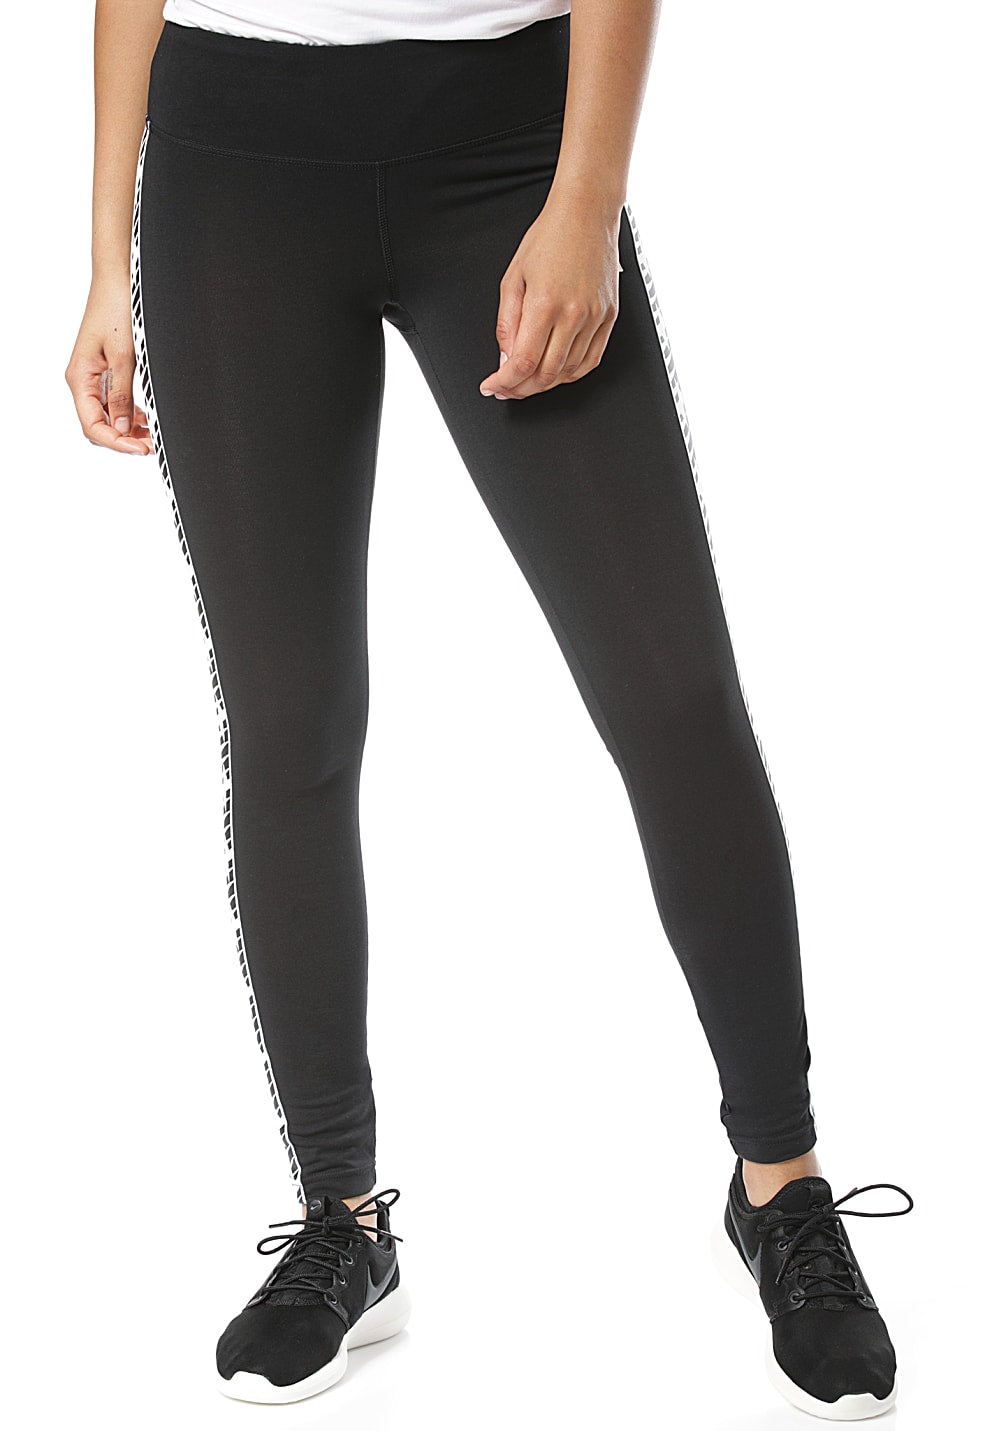 New Balance Leggings Womens Extra Small Black Athletic Pants NB Dry